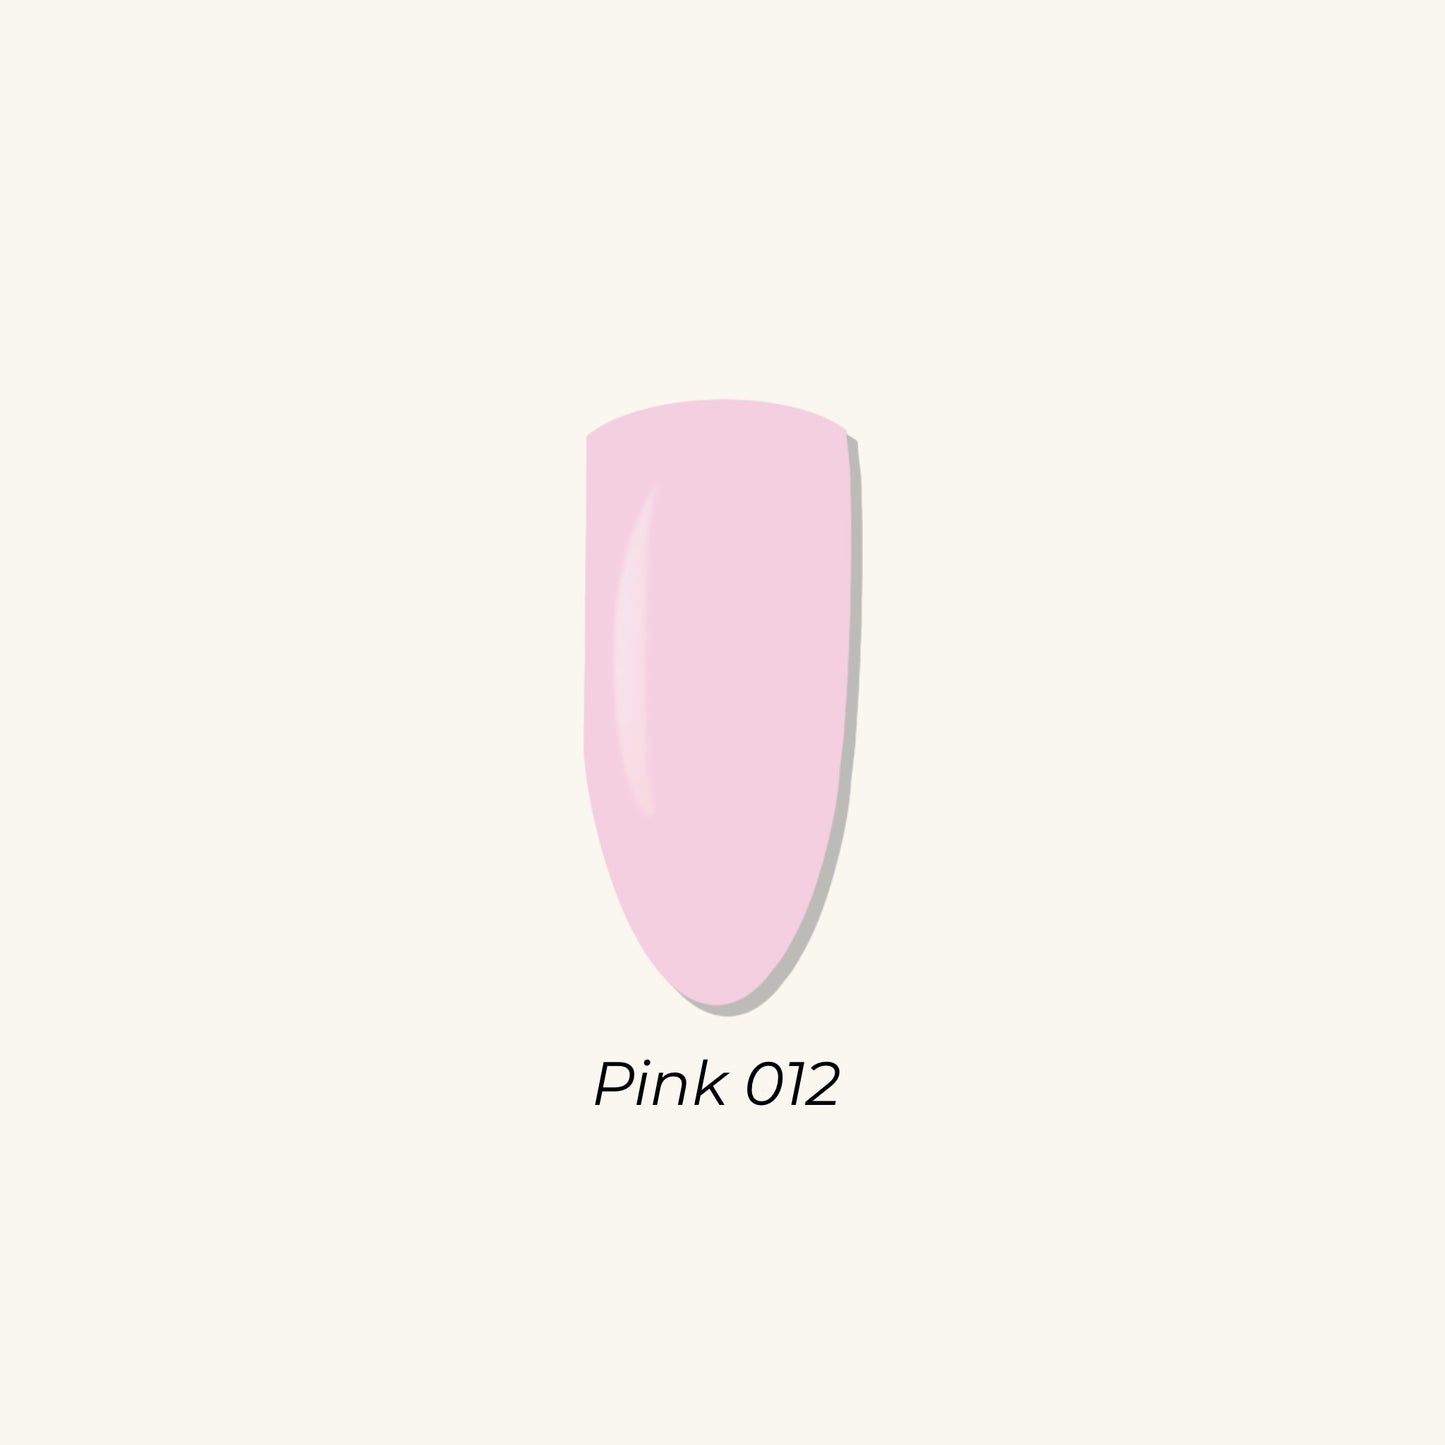 Pink 012